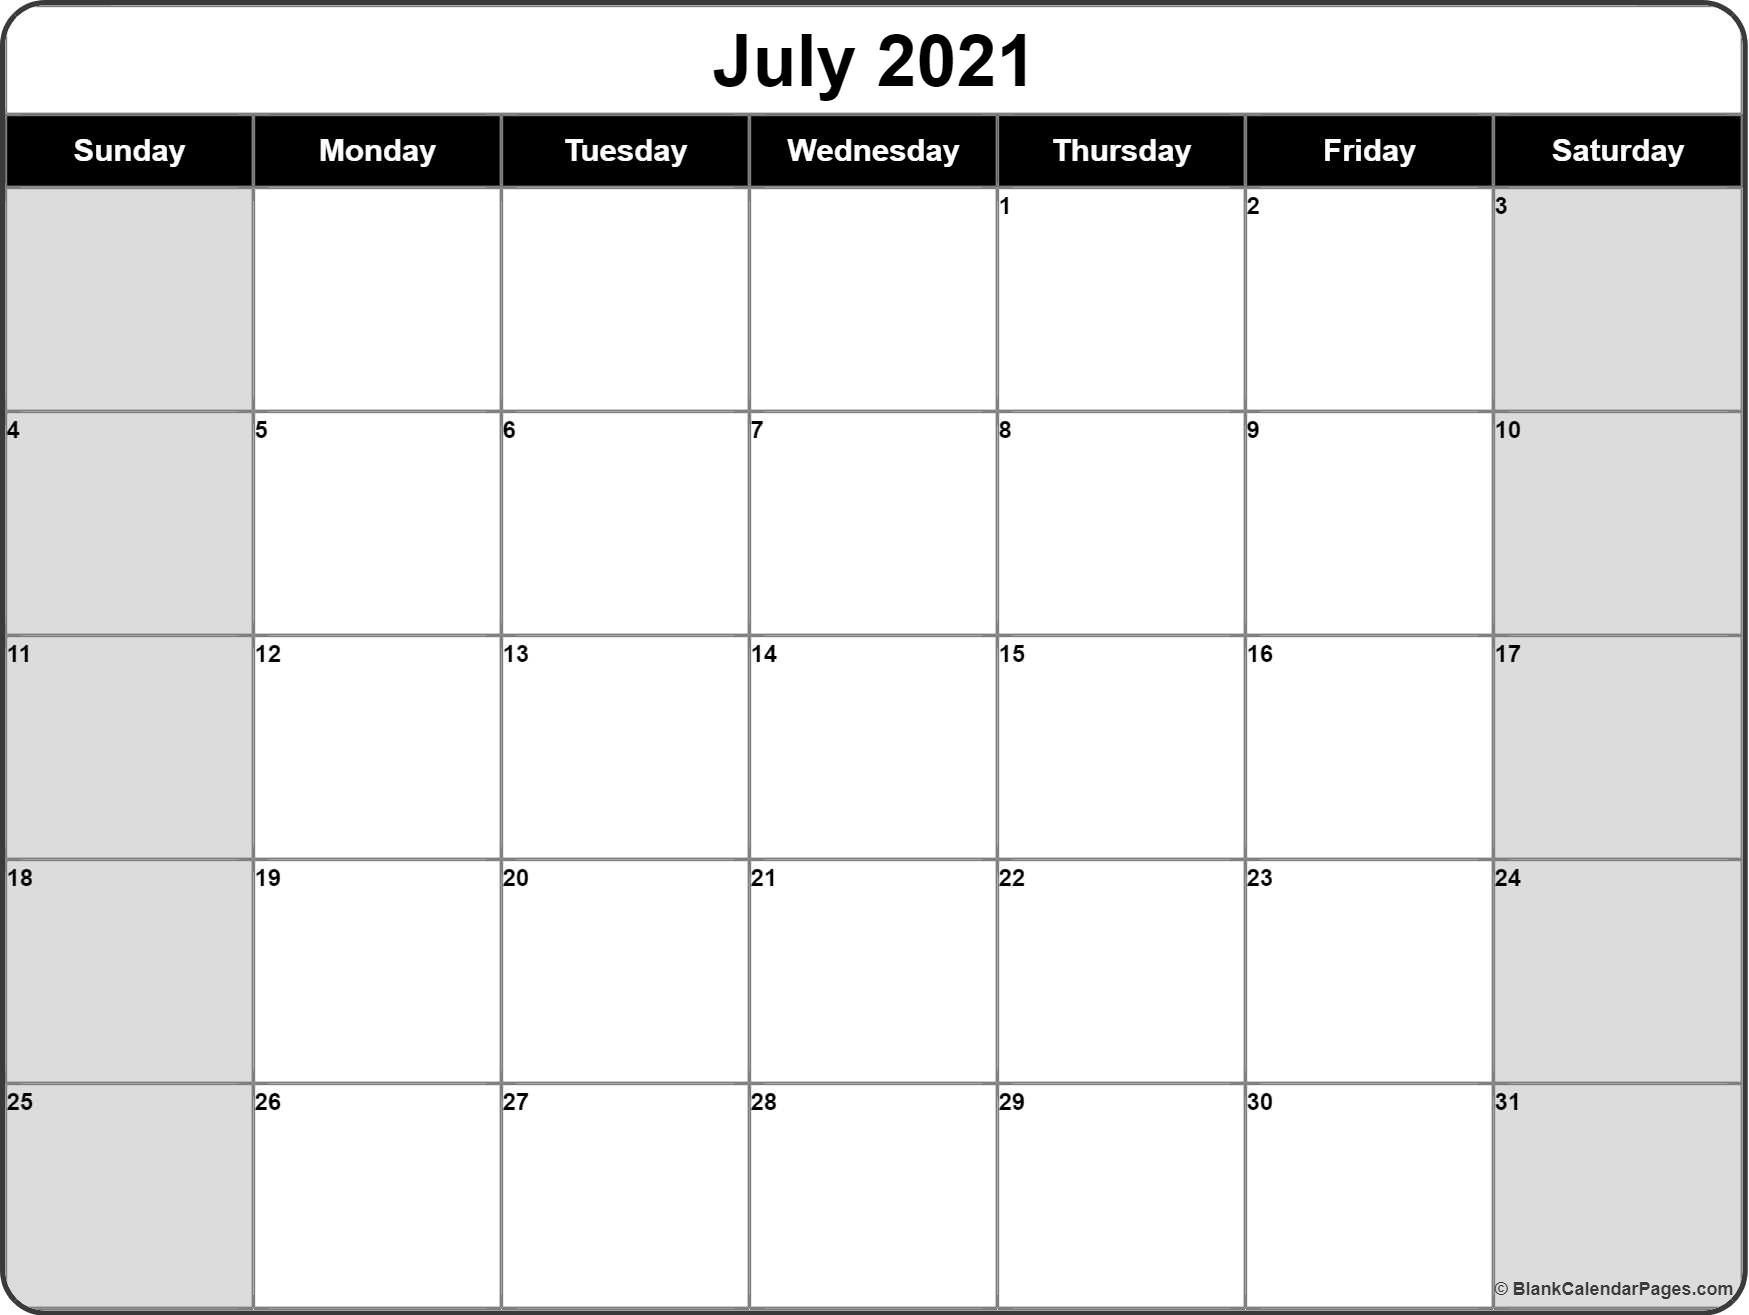 July 2021 Calendar | Free Printable Calendar Templates July 2021 Calendar Template